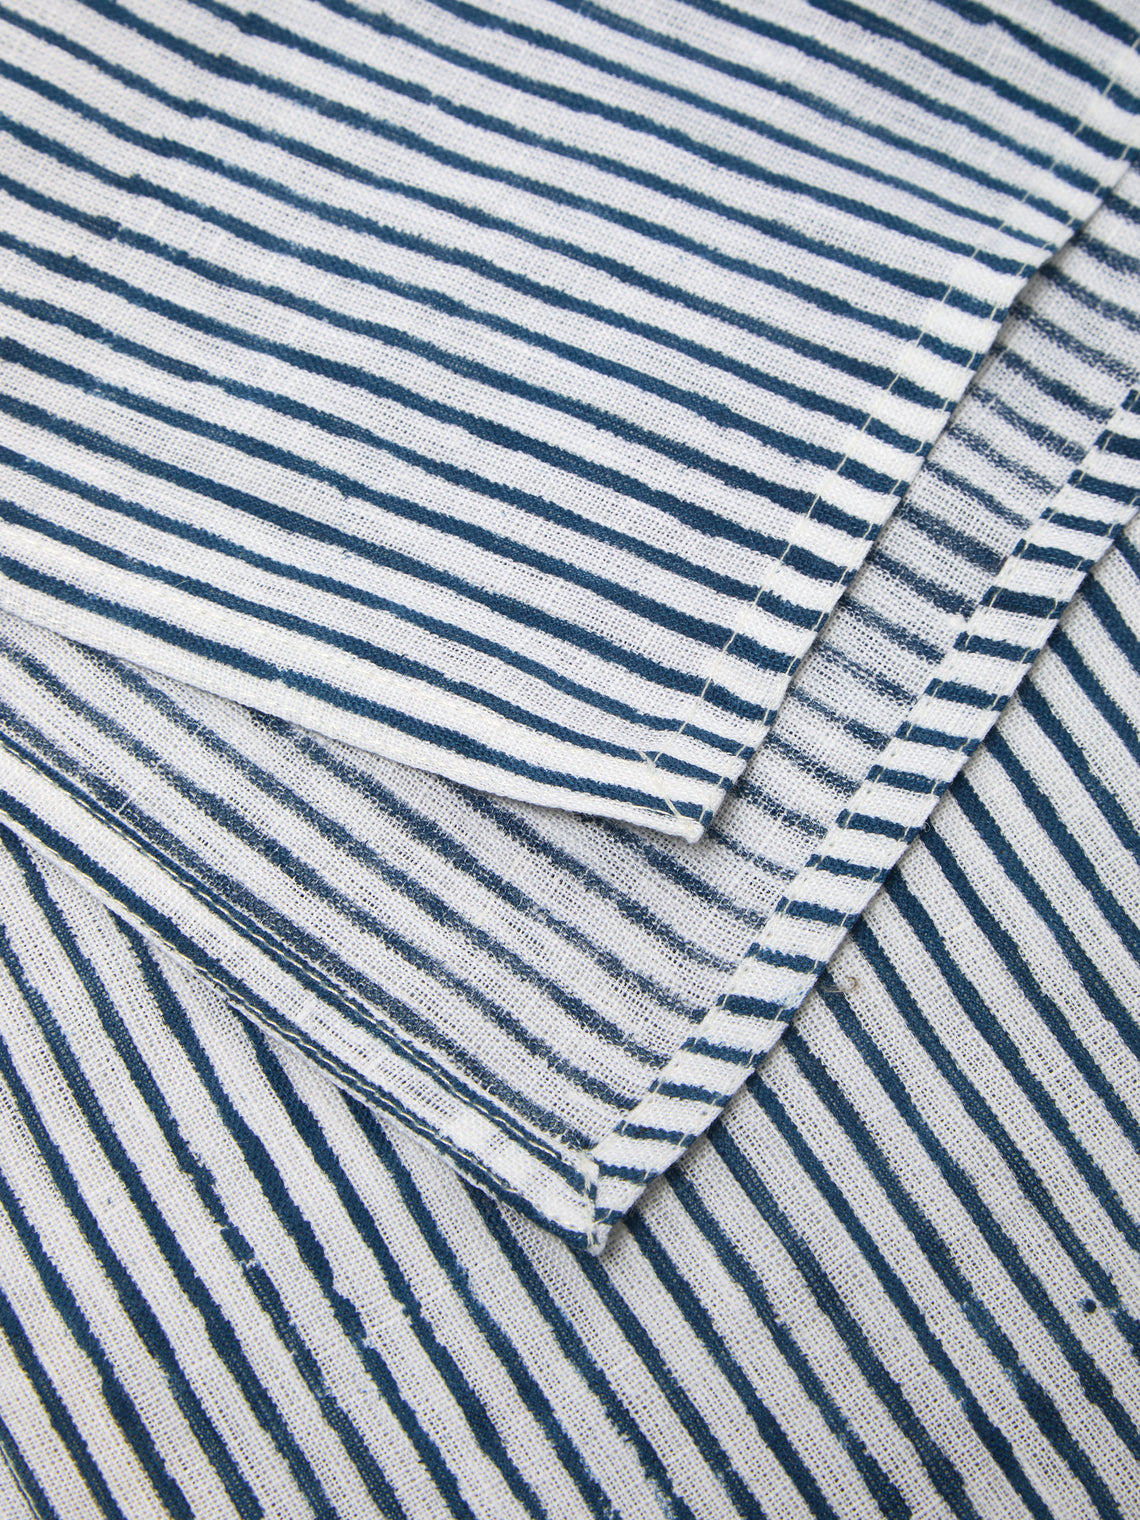 Chamois - Stripe Block-Printed Linen Napkins (Set of 4) -  - ABASK